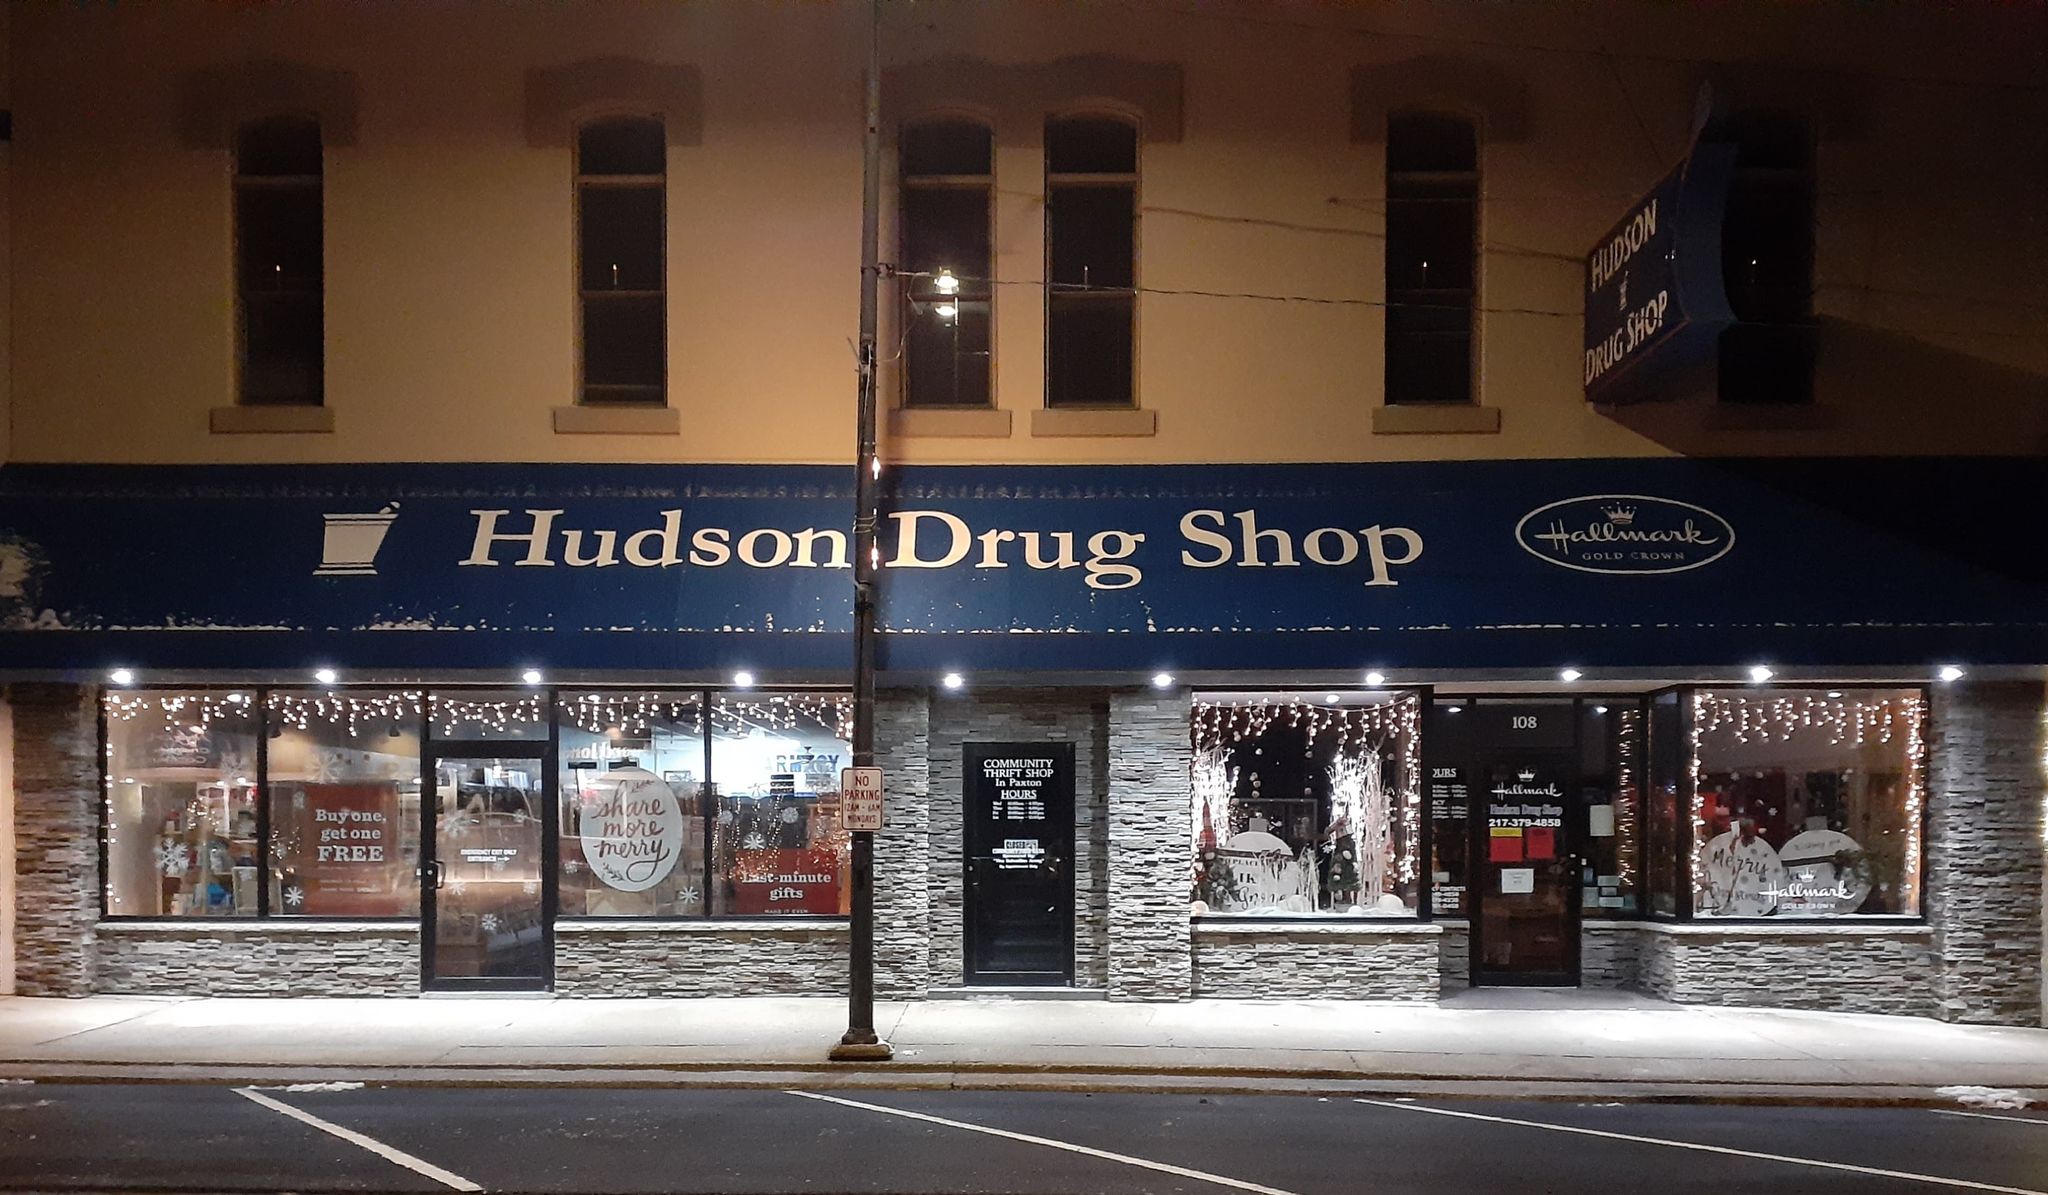 Exterior of Hudson Drug and Hallmark Shop in Paxton.